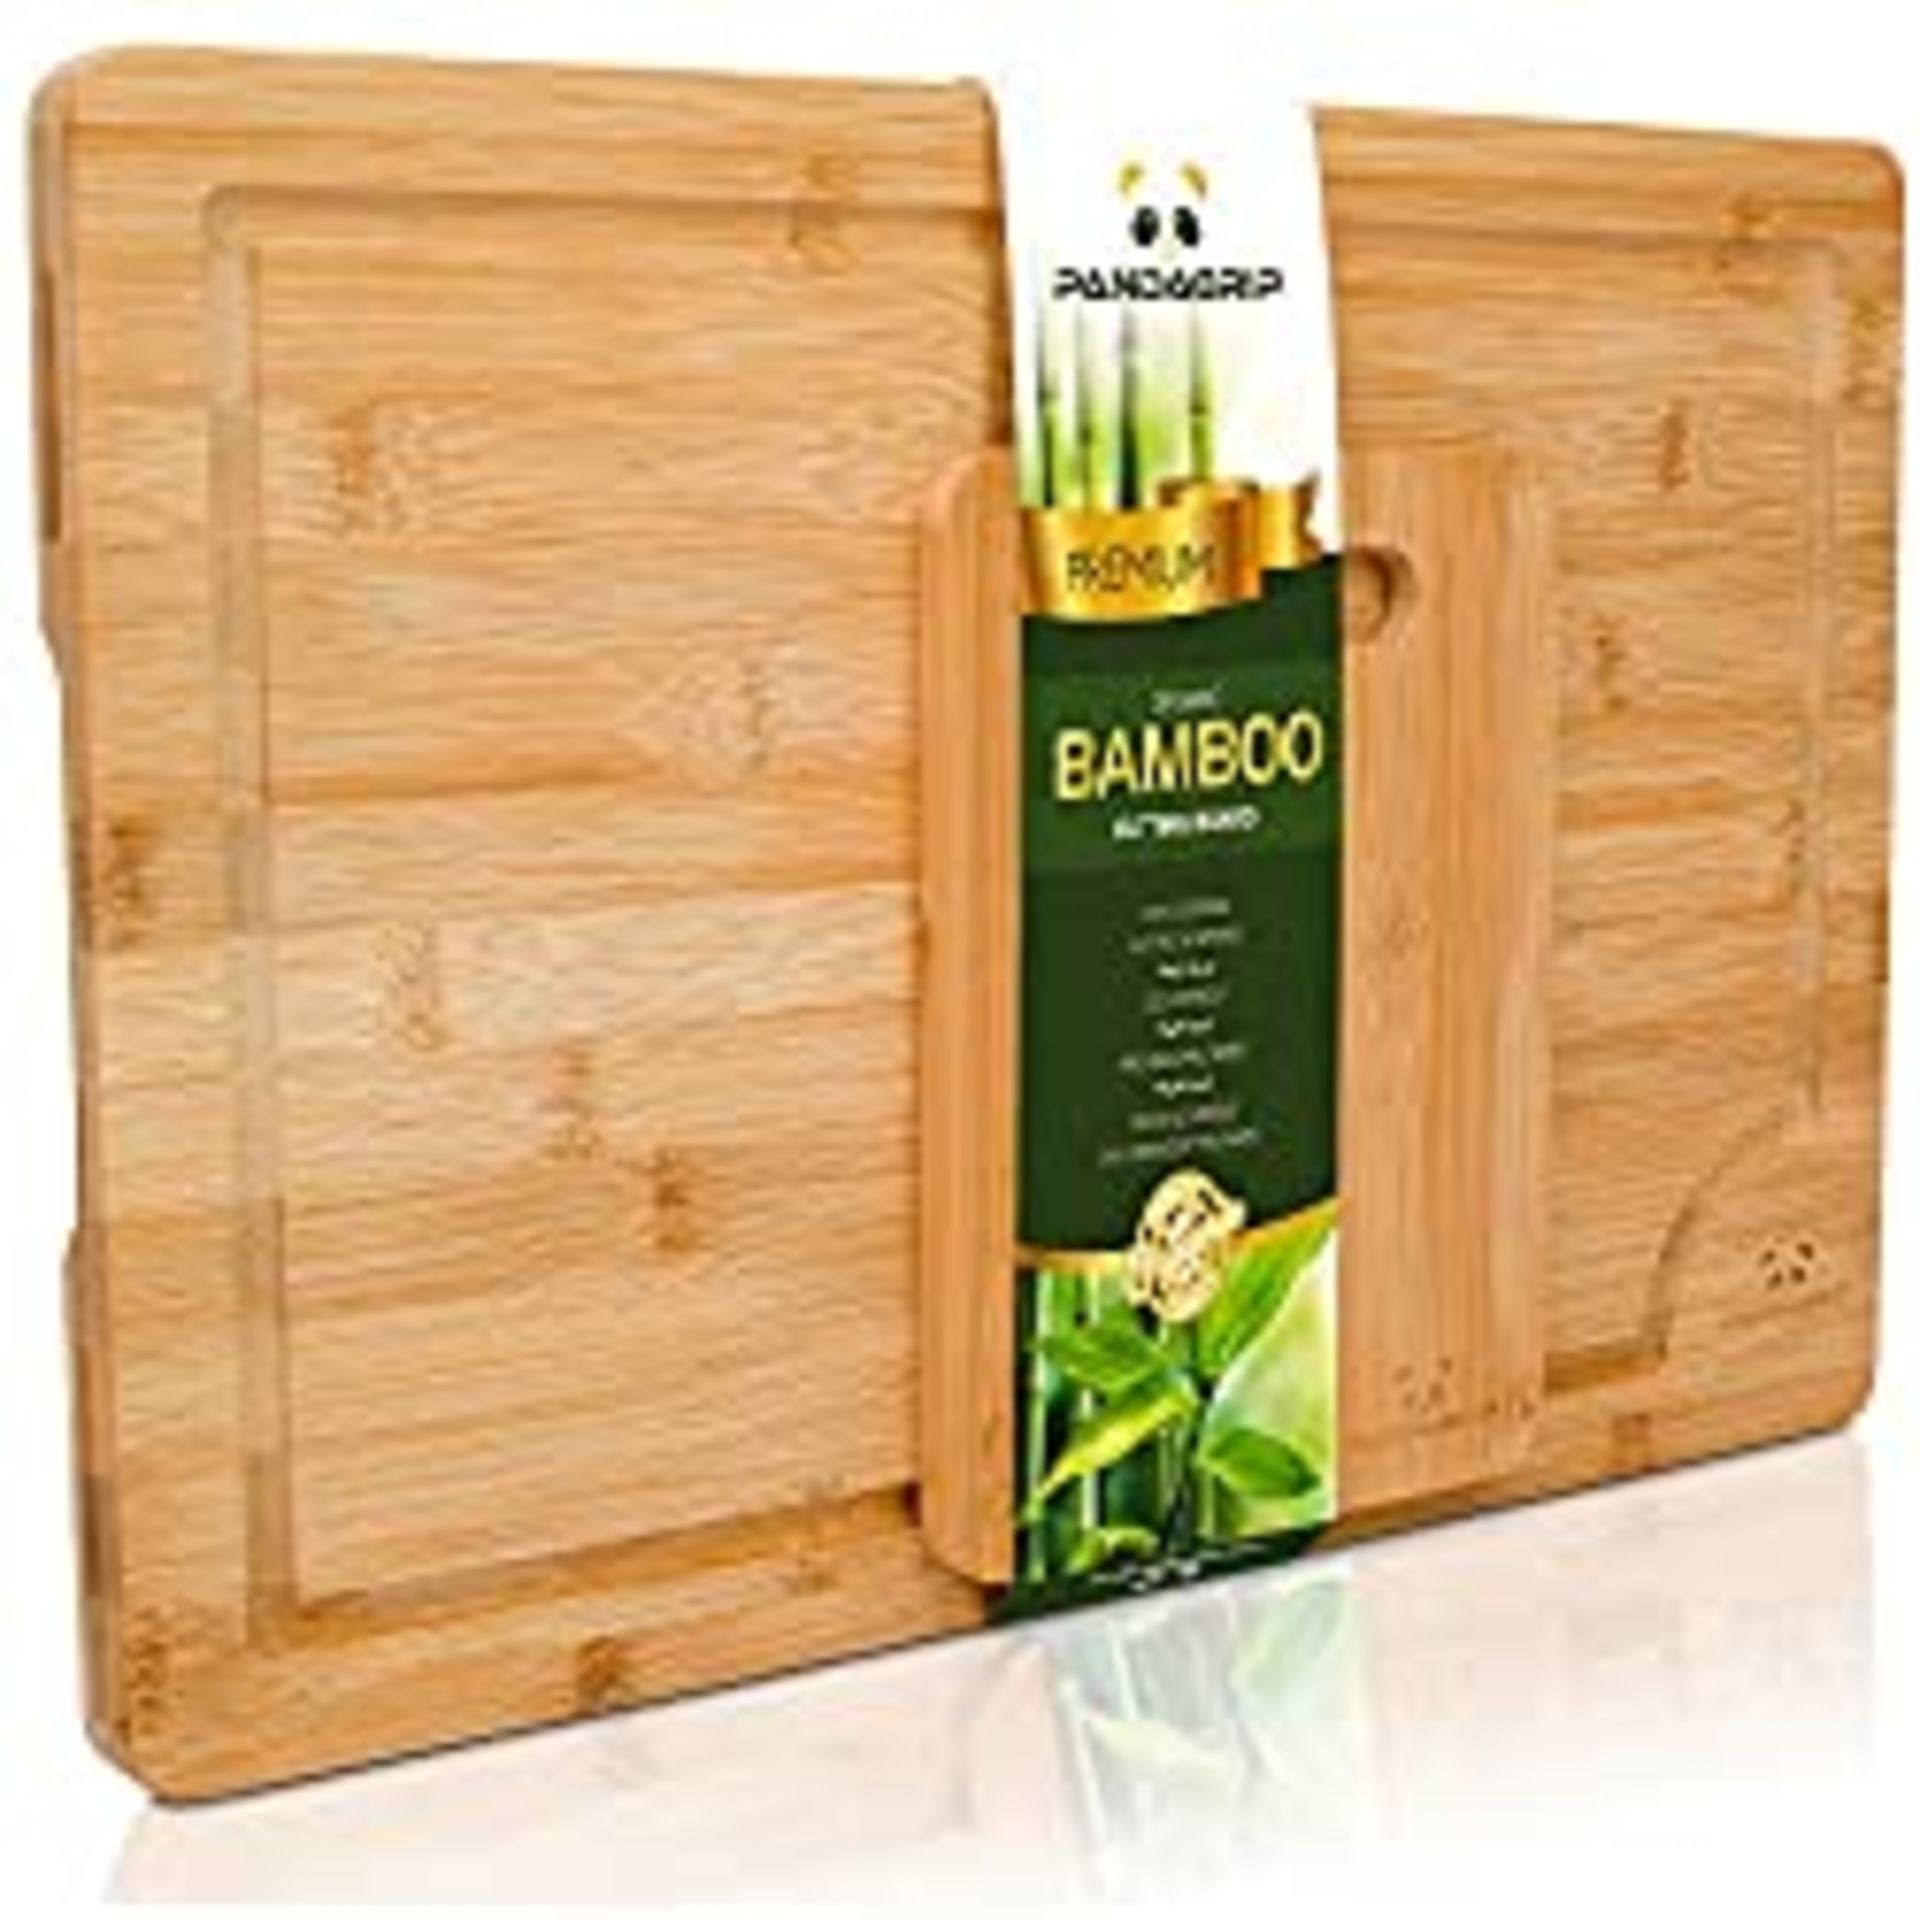 RRP £16.97 PandaGrip Extra Large Organic Bamboo Cutting Board